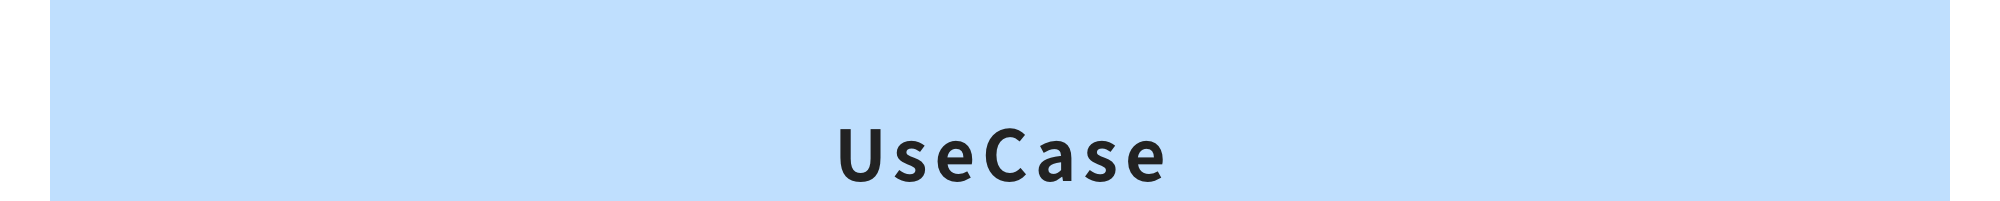 UseCase